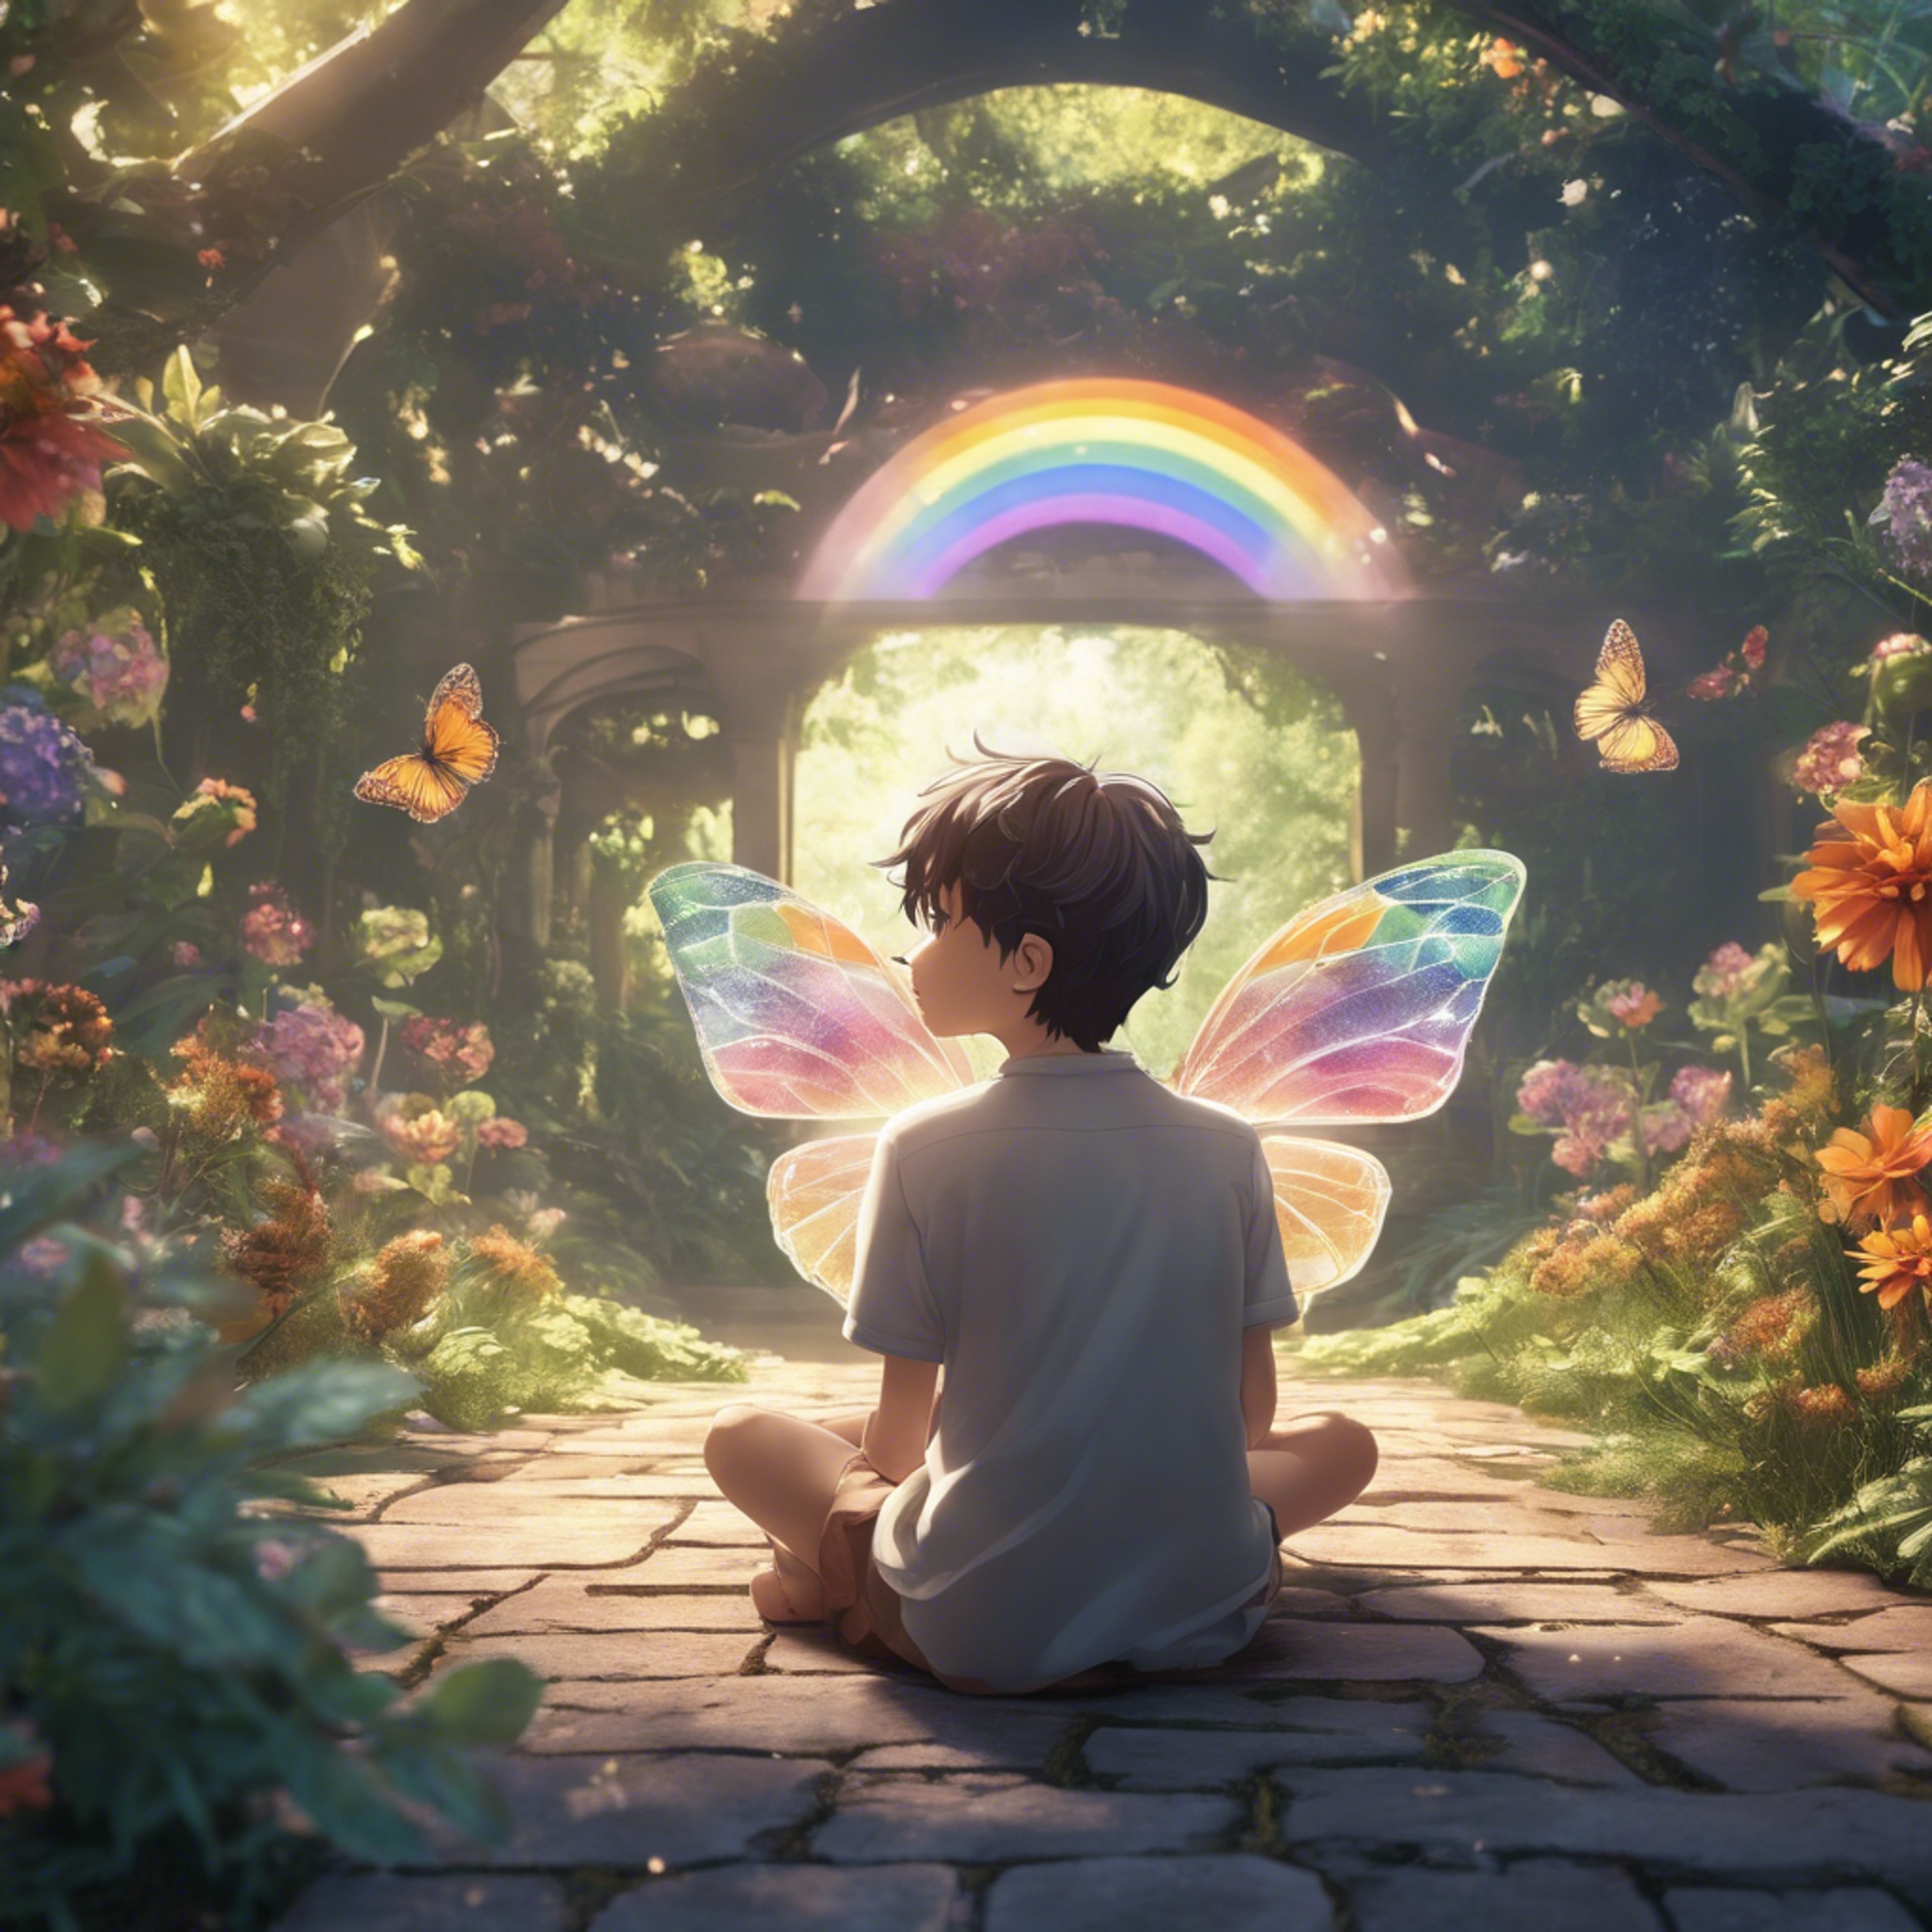 An innocent anime boy with rainbow wings gazing at a butterfly in a hidden garden.壁紙[04bec09c0c034ff9b0e5]